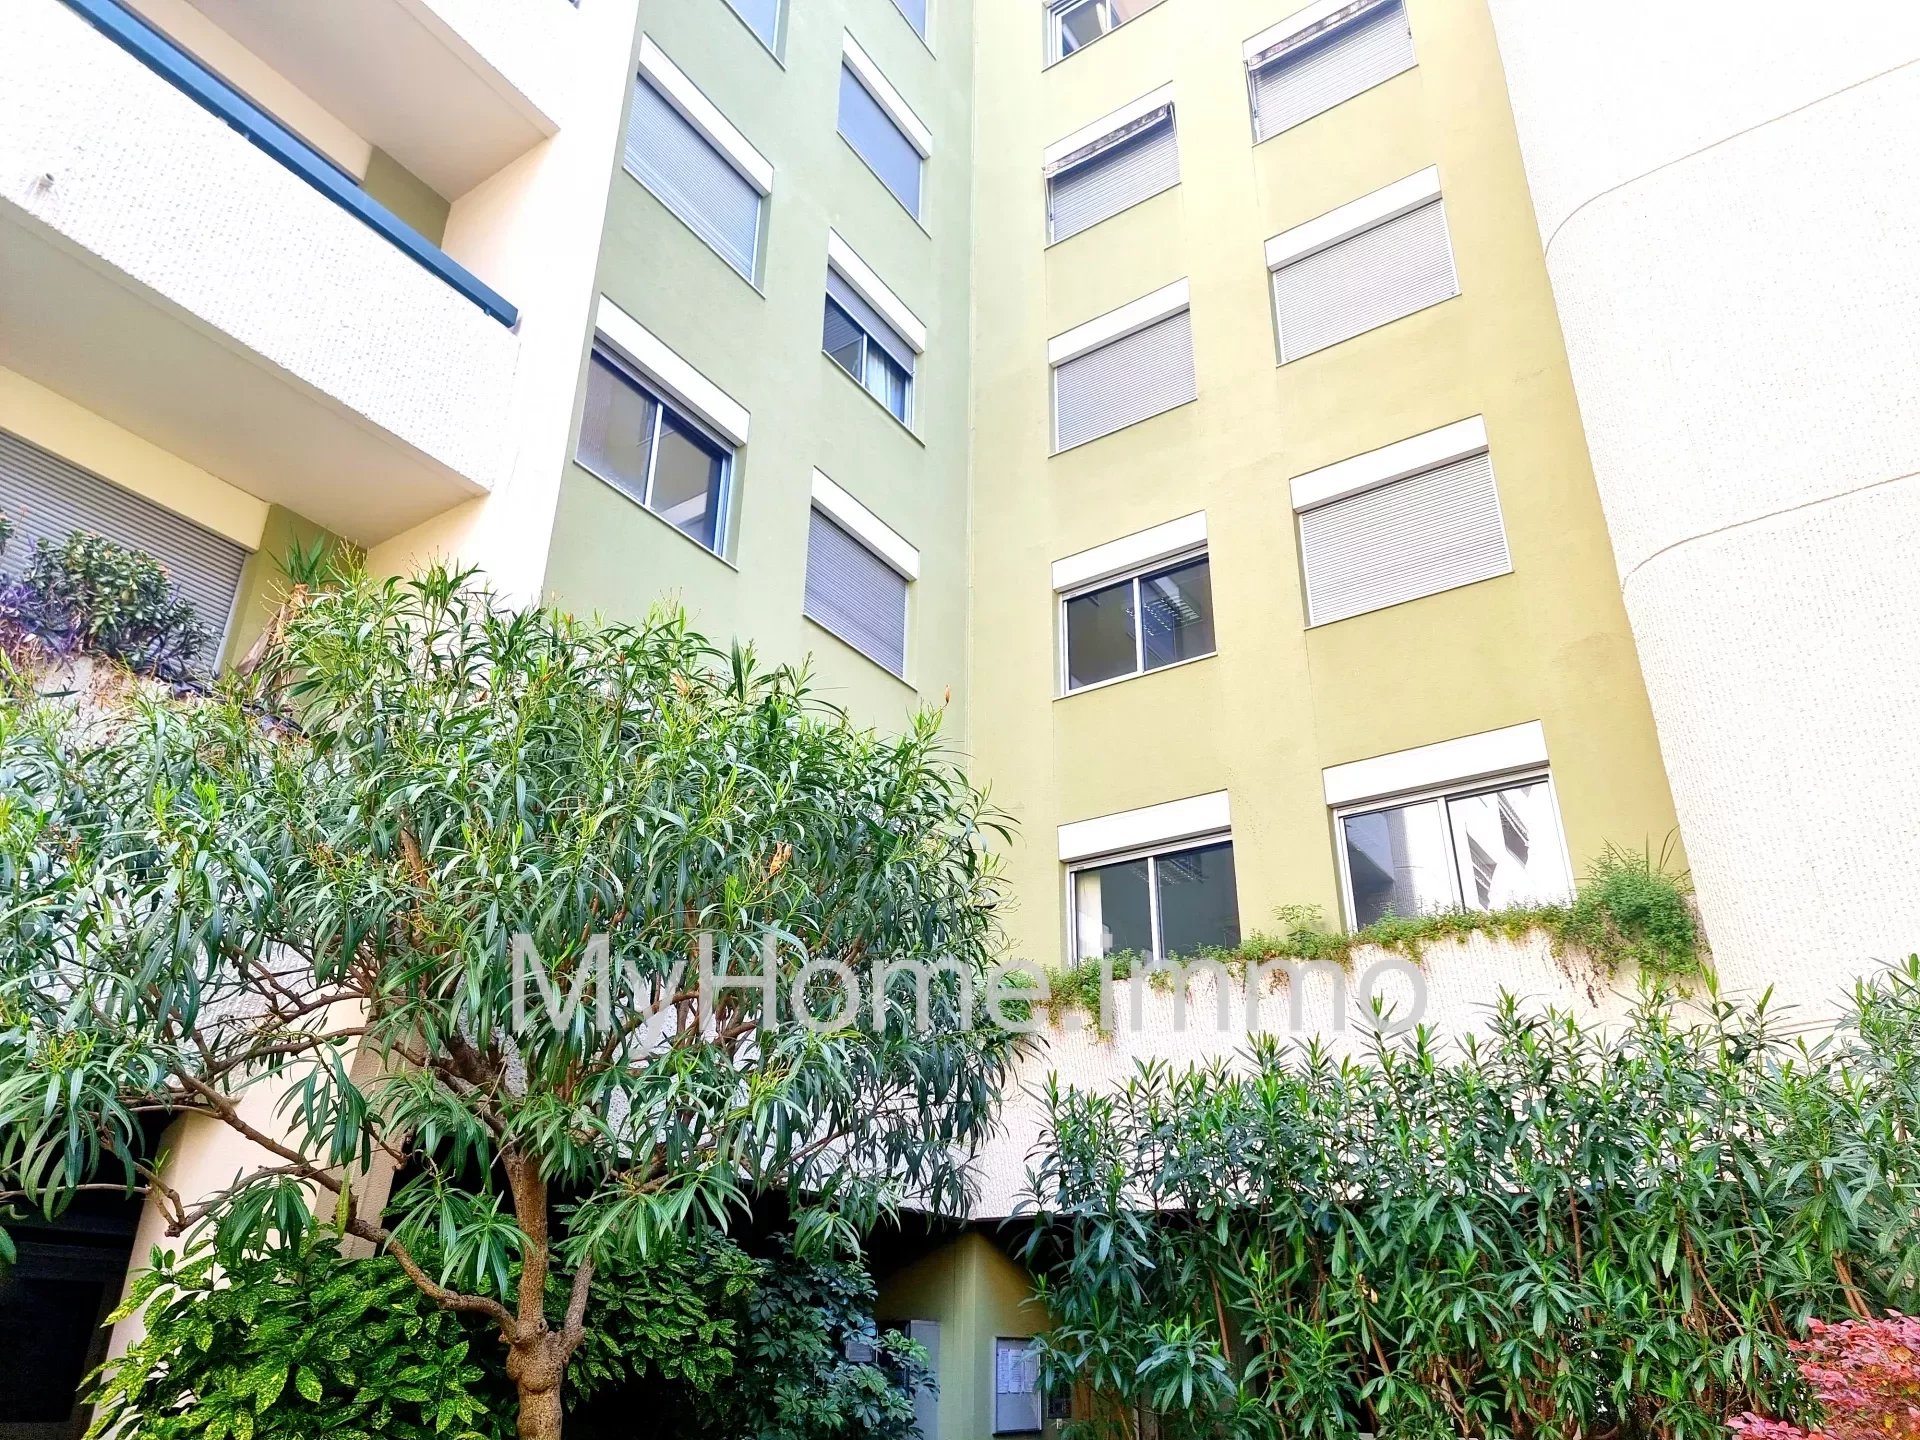 Vente Appartement 69m² 3 Pièces à Nice (06300) - Myhome.Immo